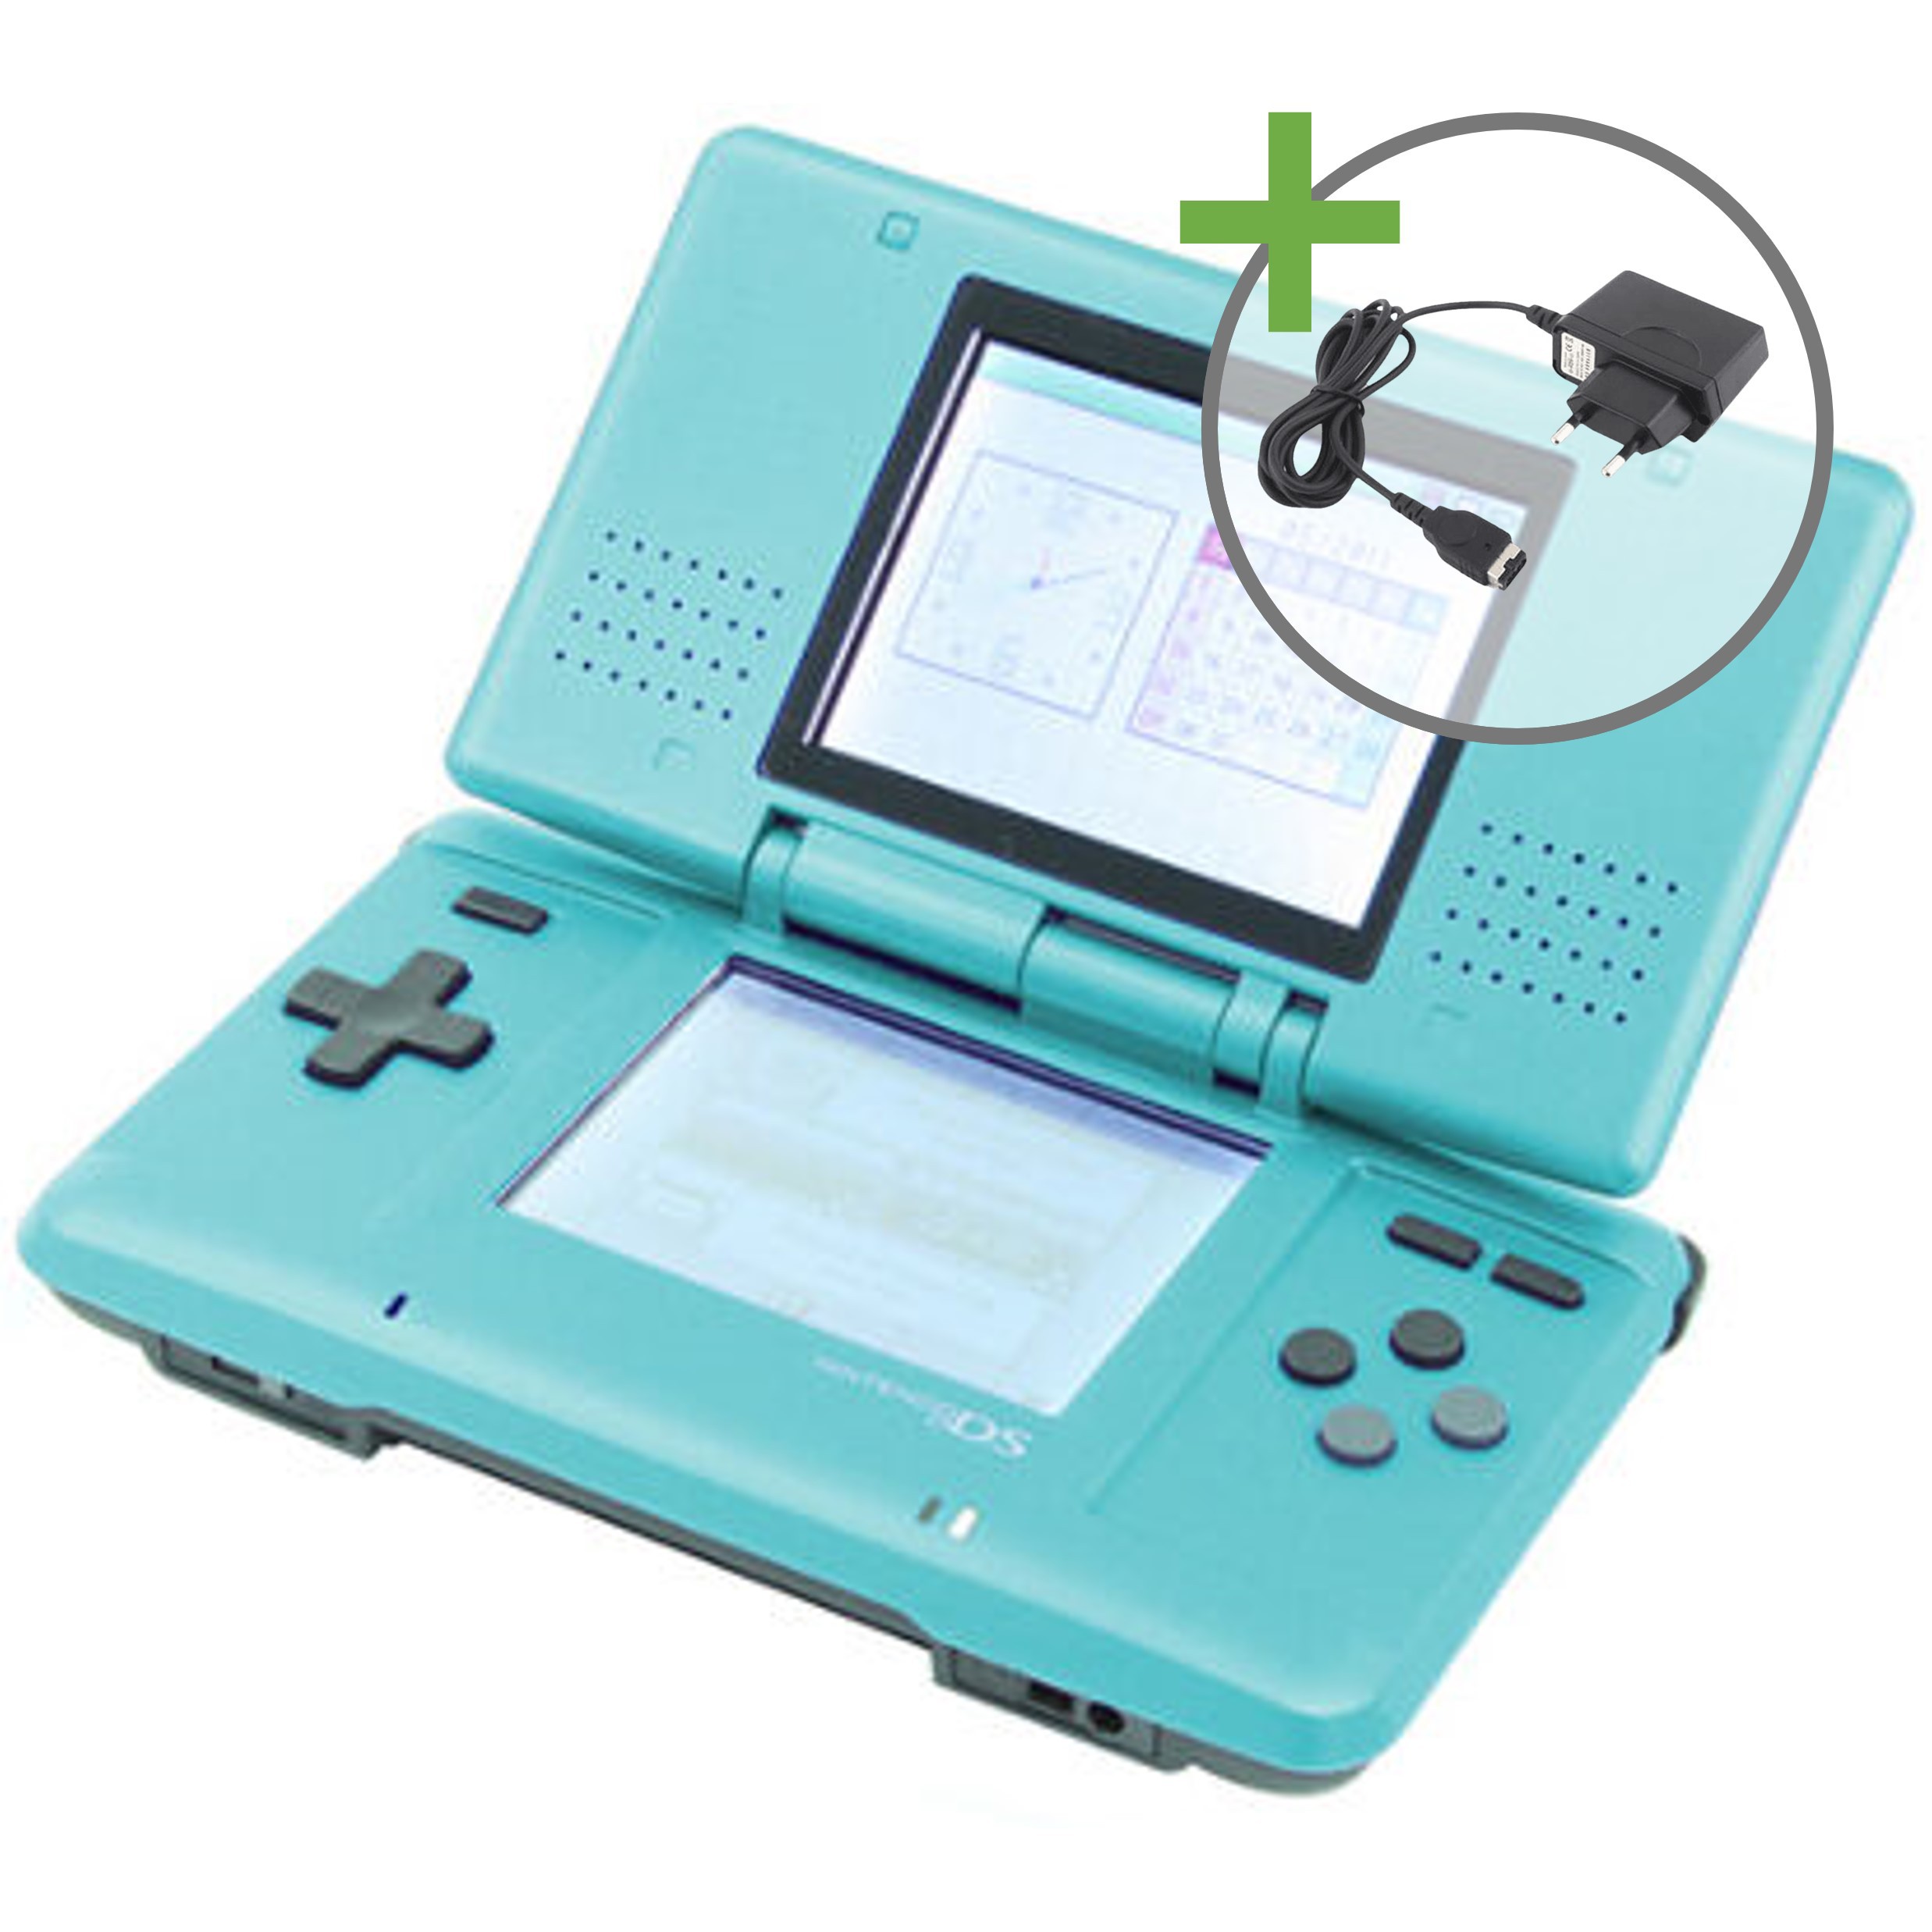 Nintendo DS Original - Turquoise Blue - Nintendo DS Hardware - 2